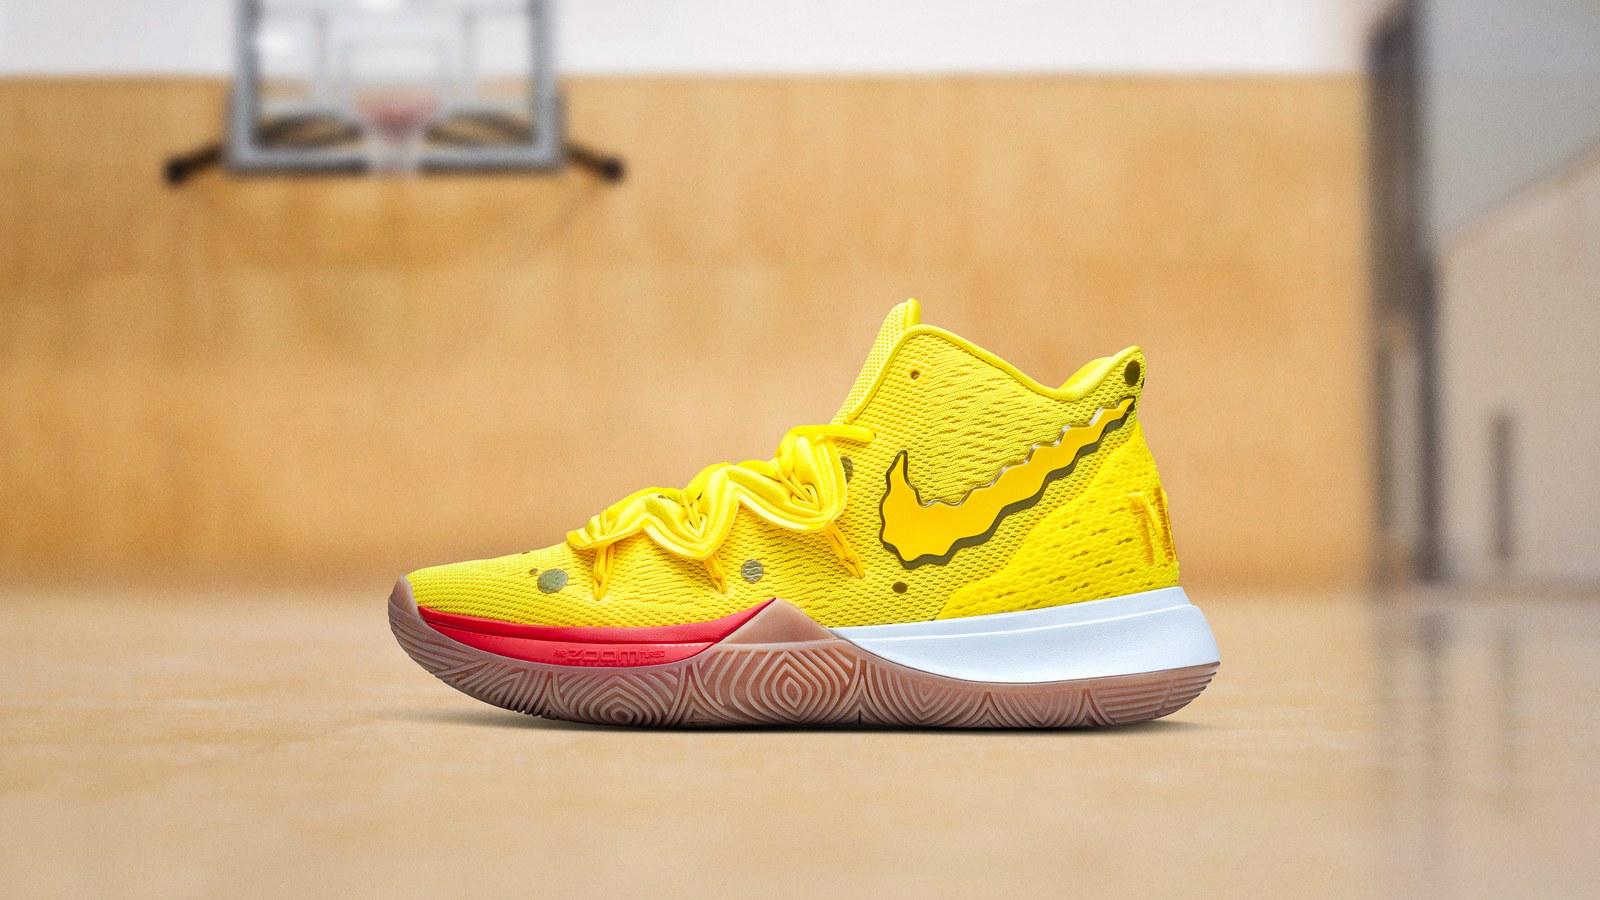 Kyrie Irving Unveiled His “SpongeBob SquarePants” Line of Nike